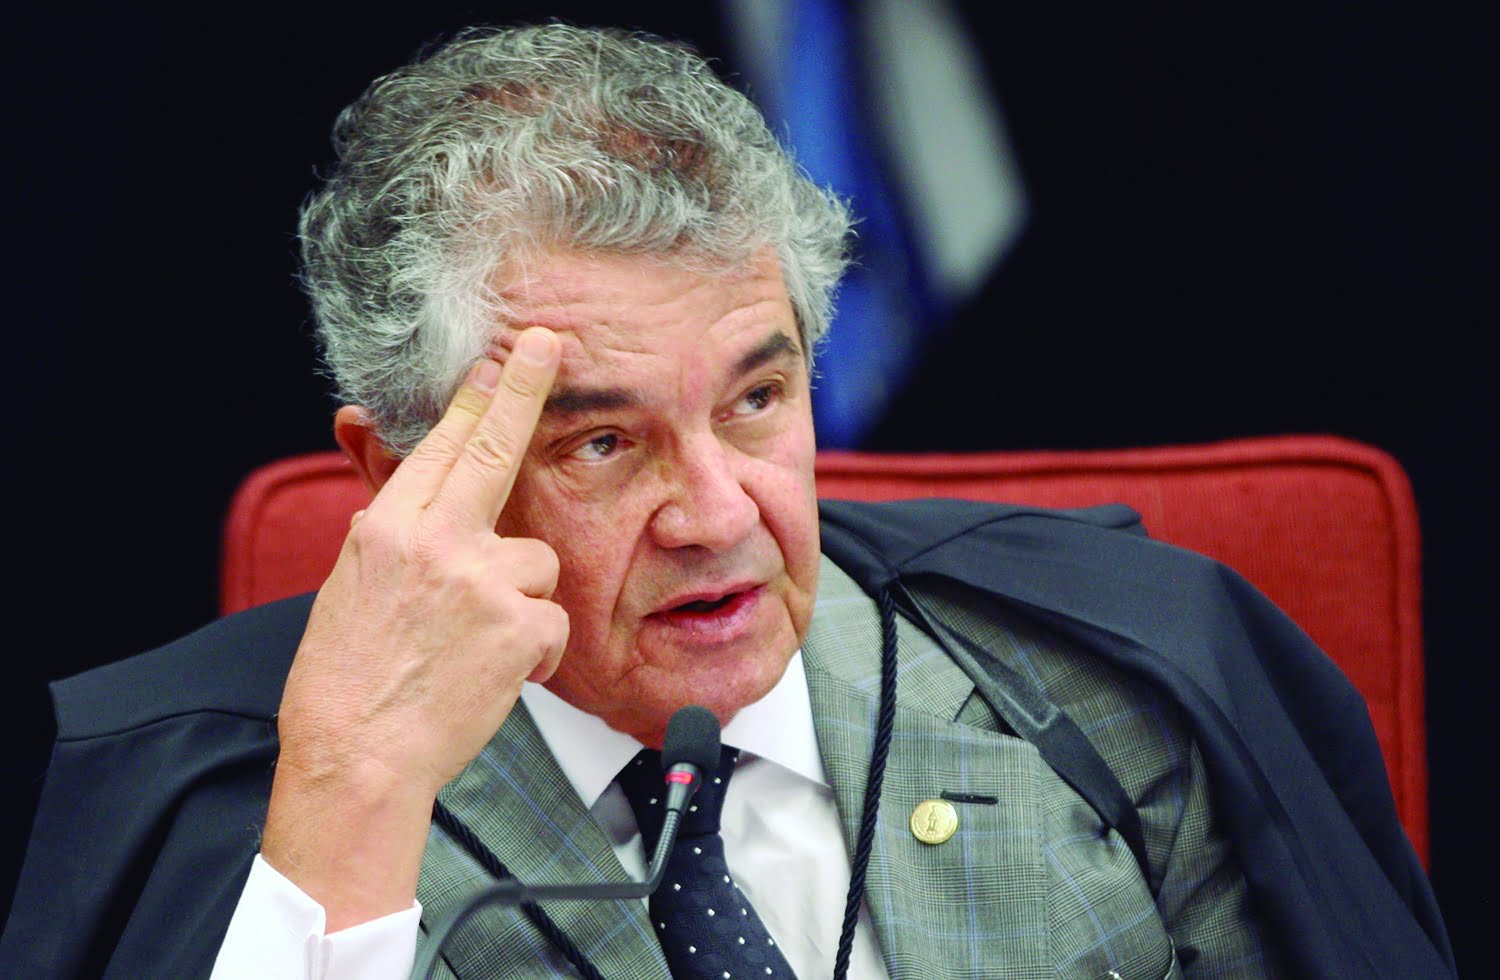 Momento do reajuste do STF foi inoportuno, diz Marco Aurélio Mello